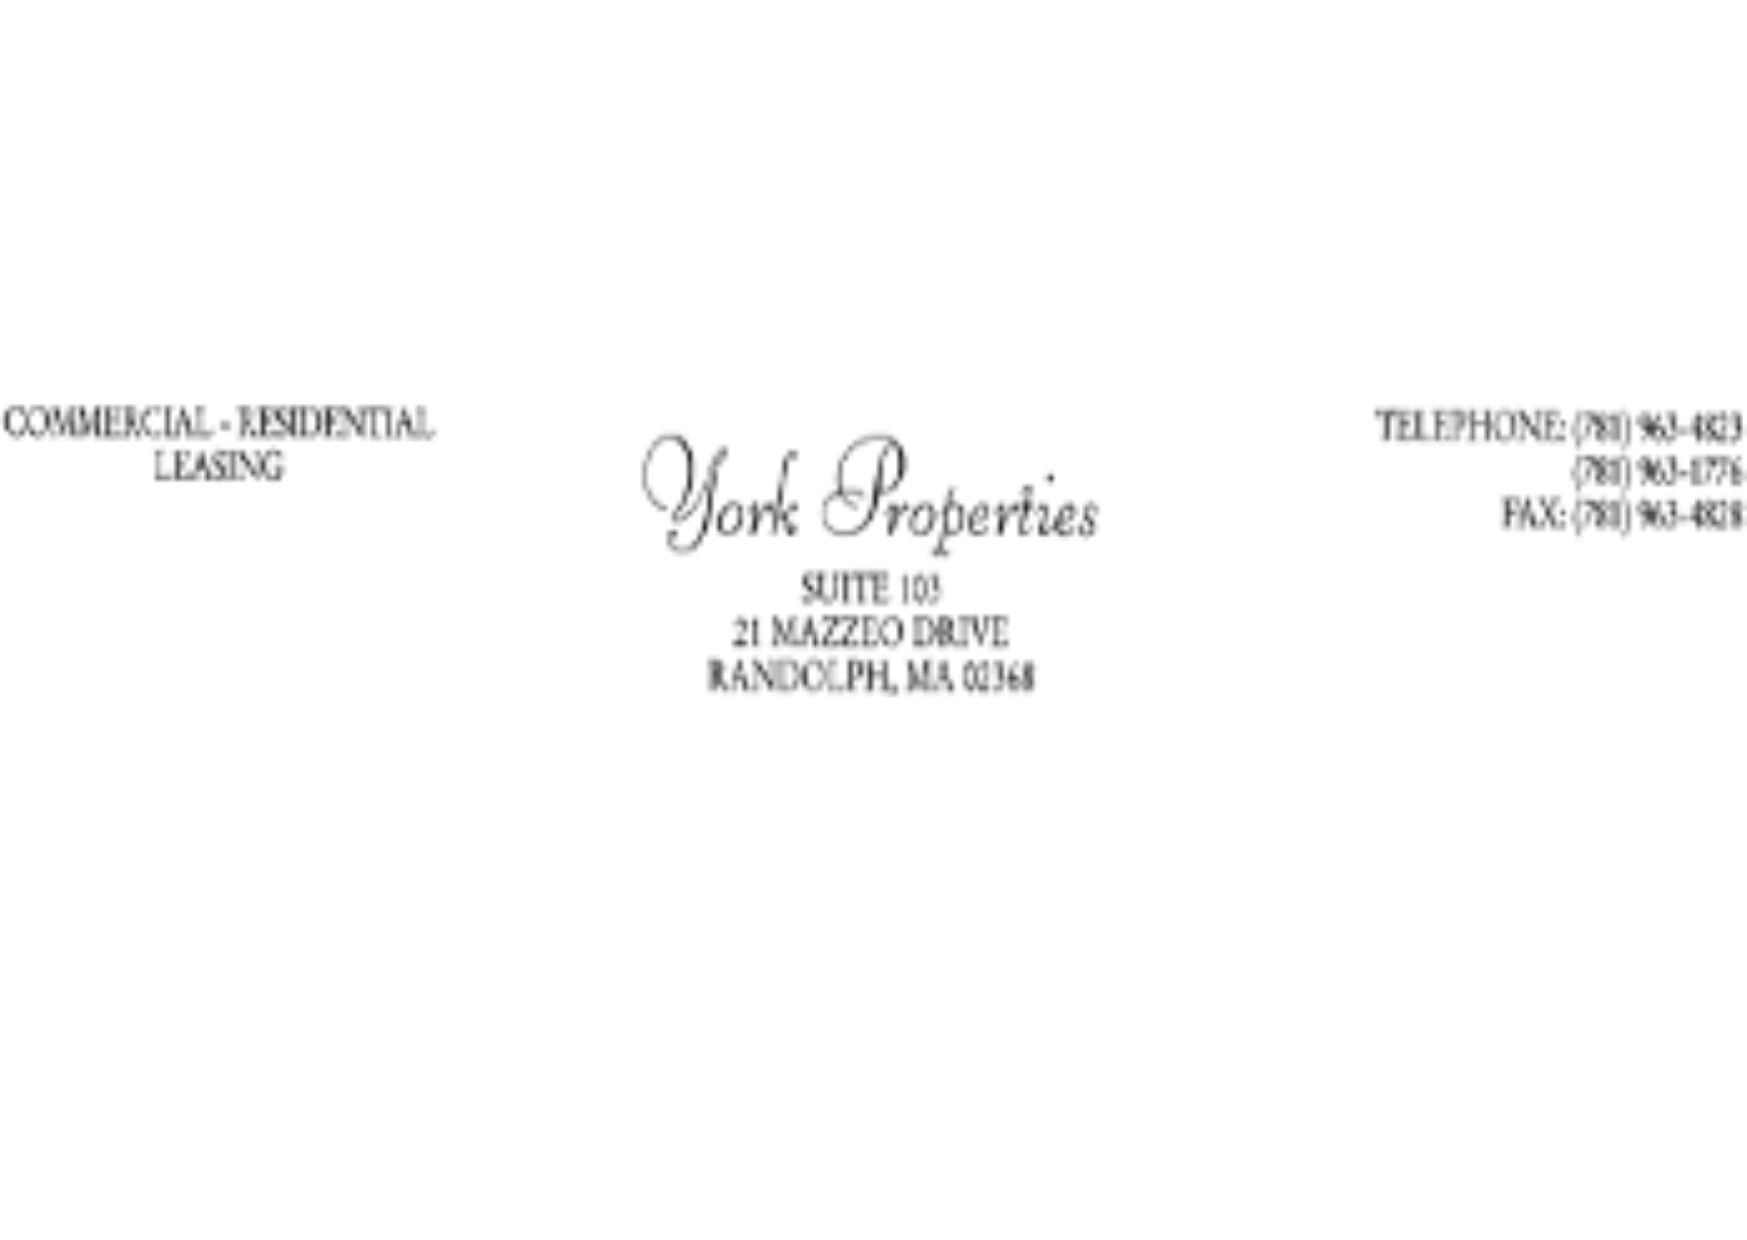 York Properties- Commercial-Residential 